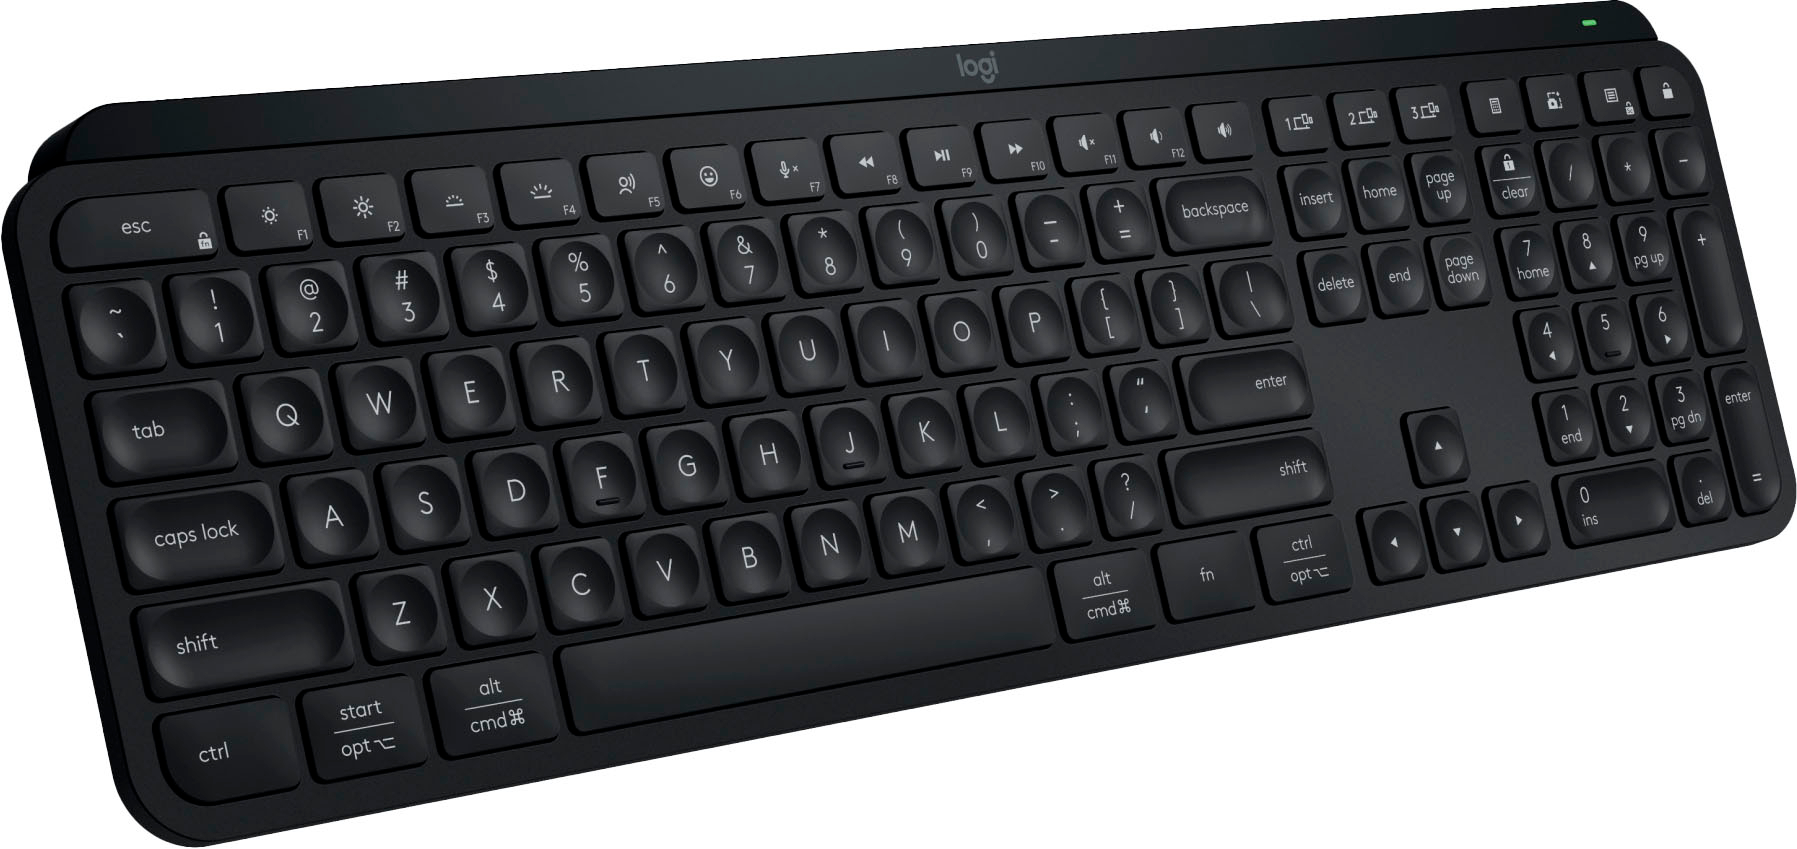 Logitech MX Mechanical Keyboard review: A smart keyboard for work